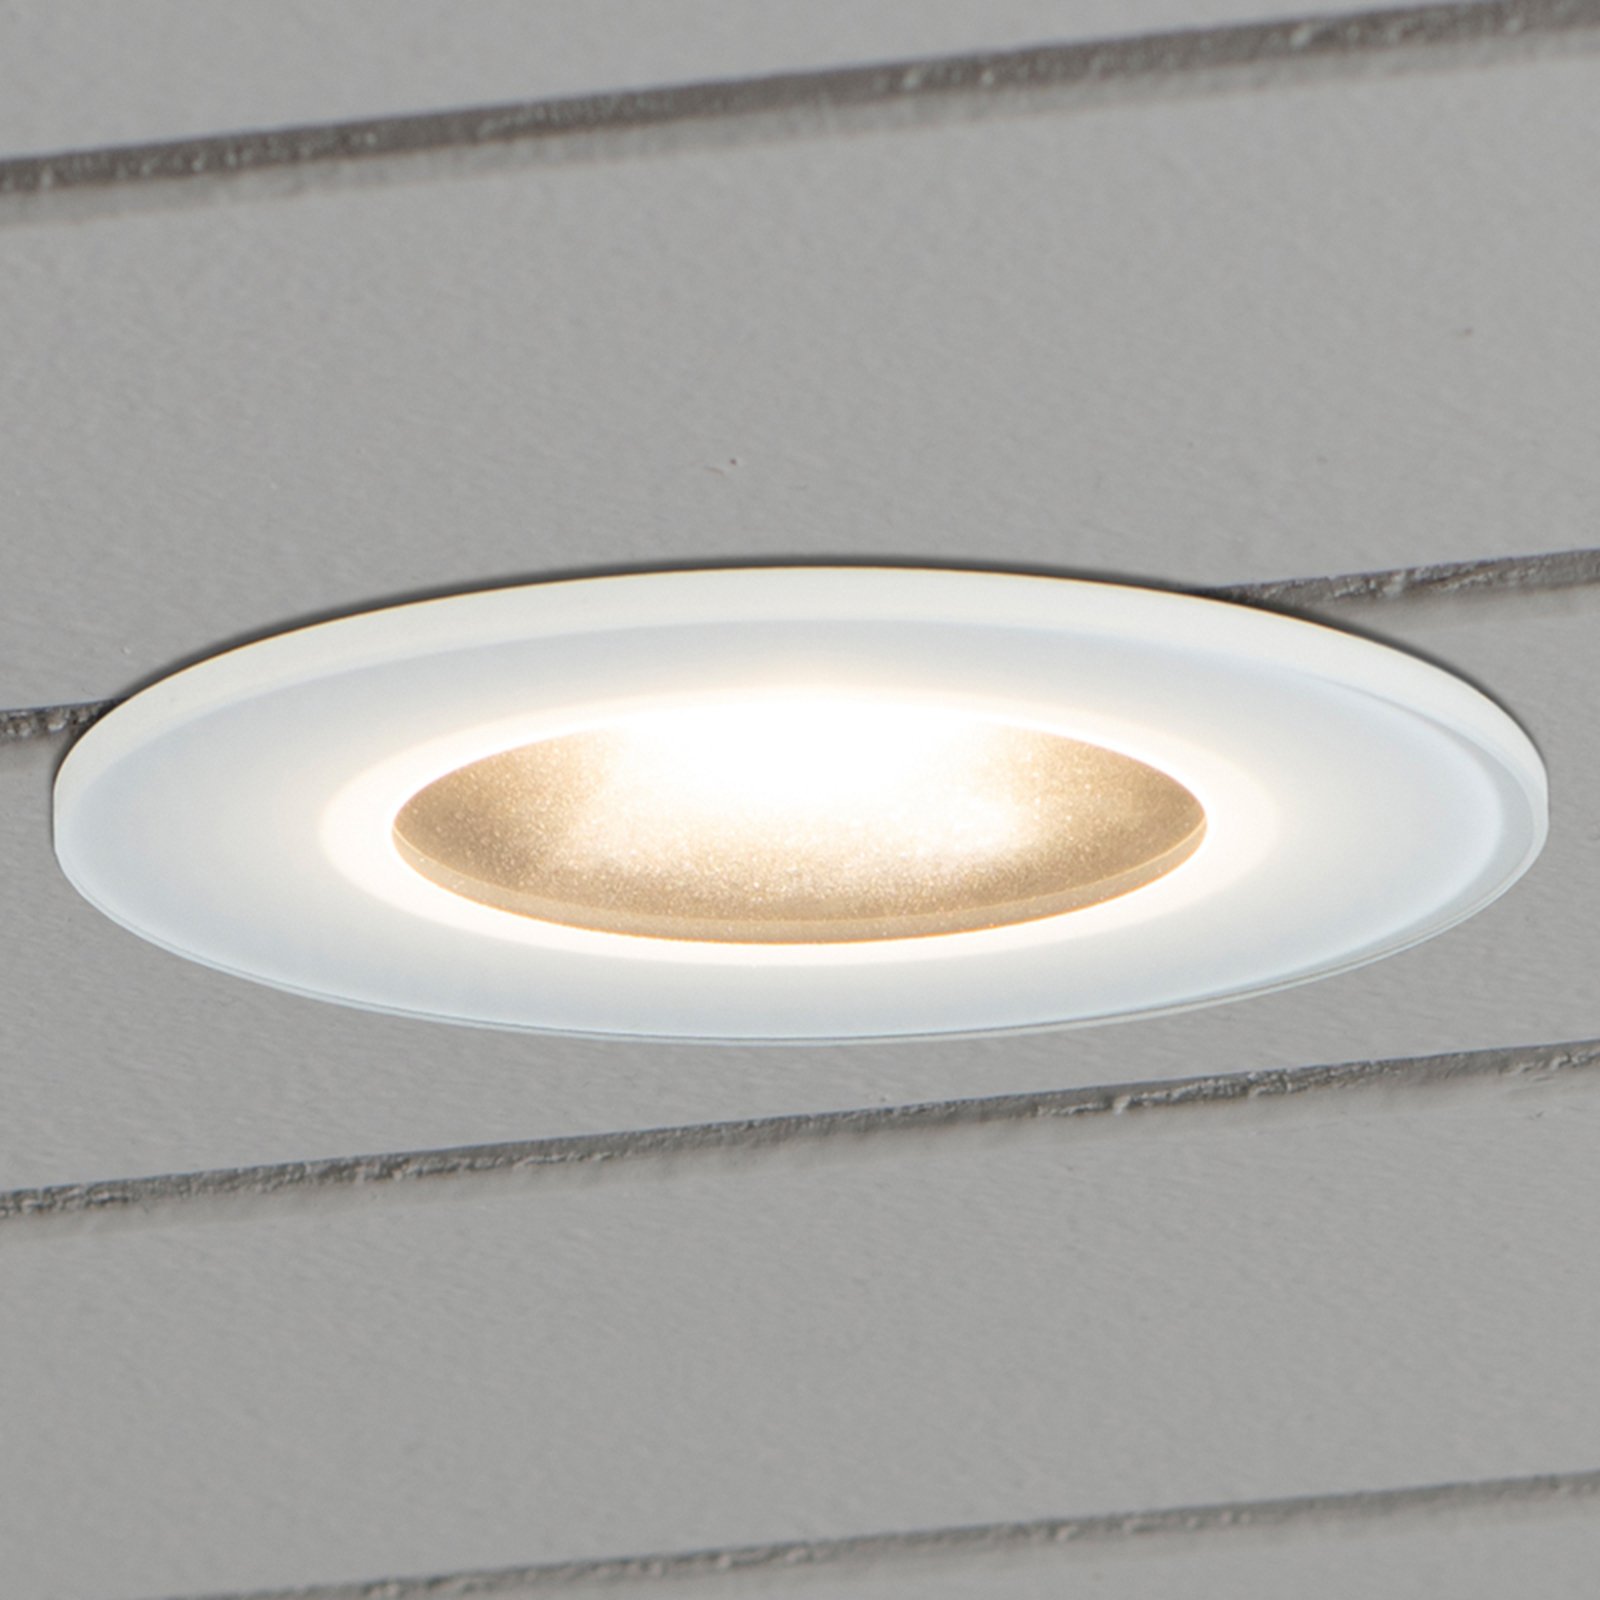 Spot LED incasso 7875 soffitti esterni, bianco